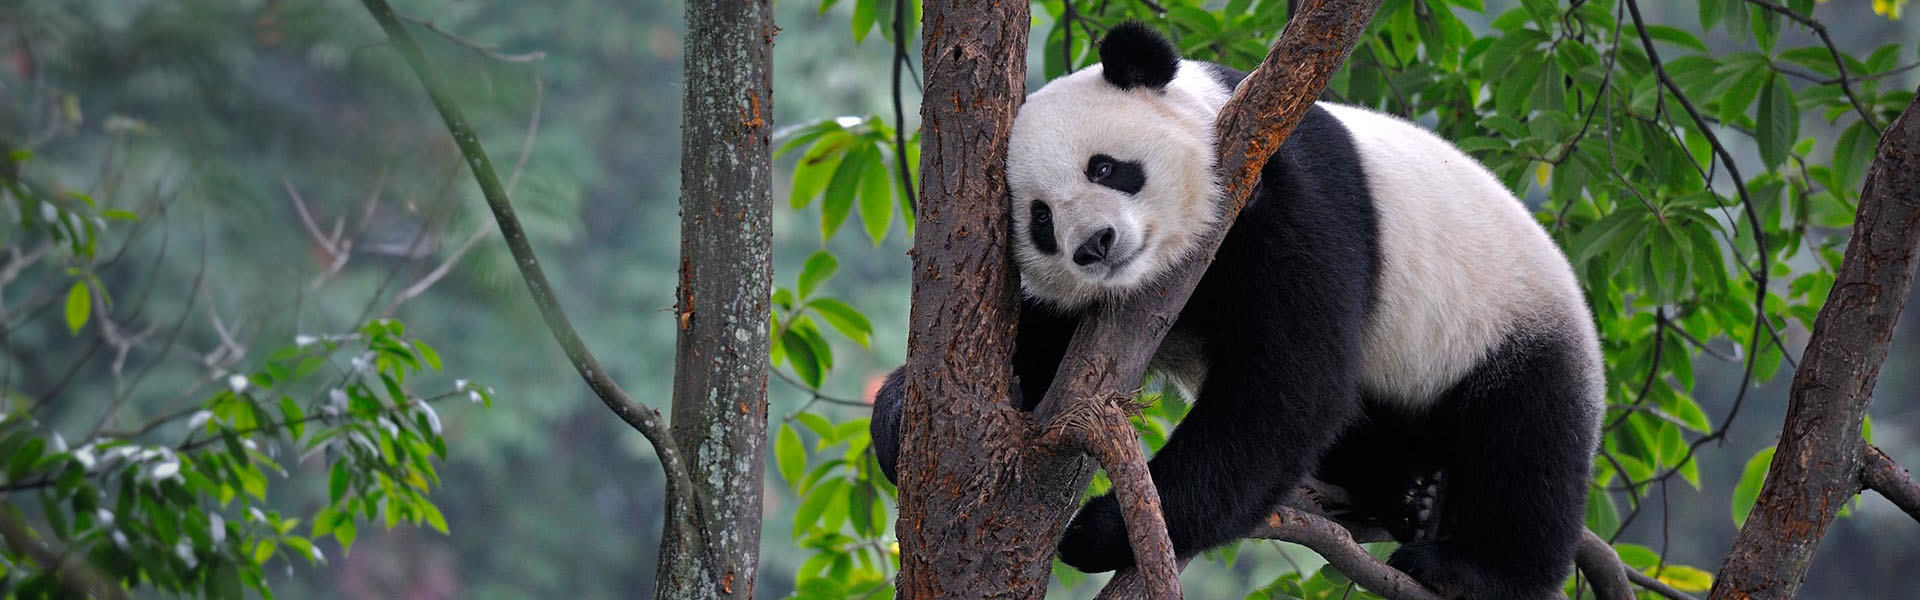 Giant Pandas, a national treasure of China